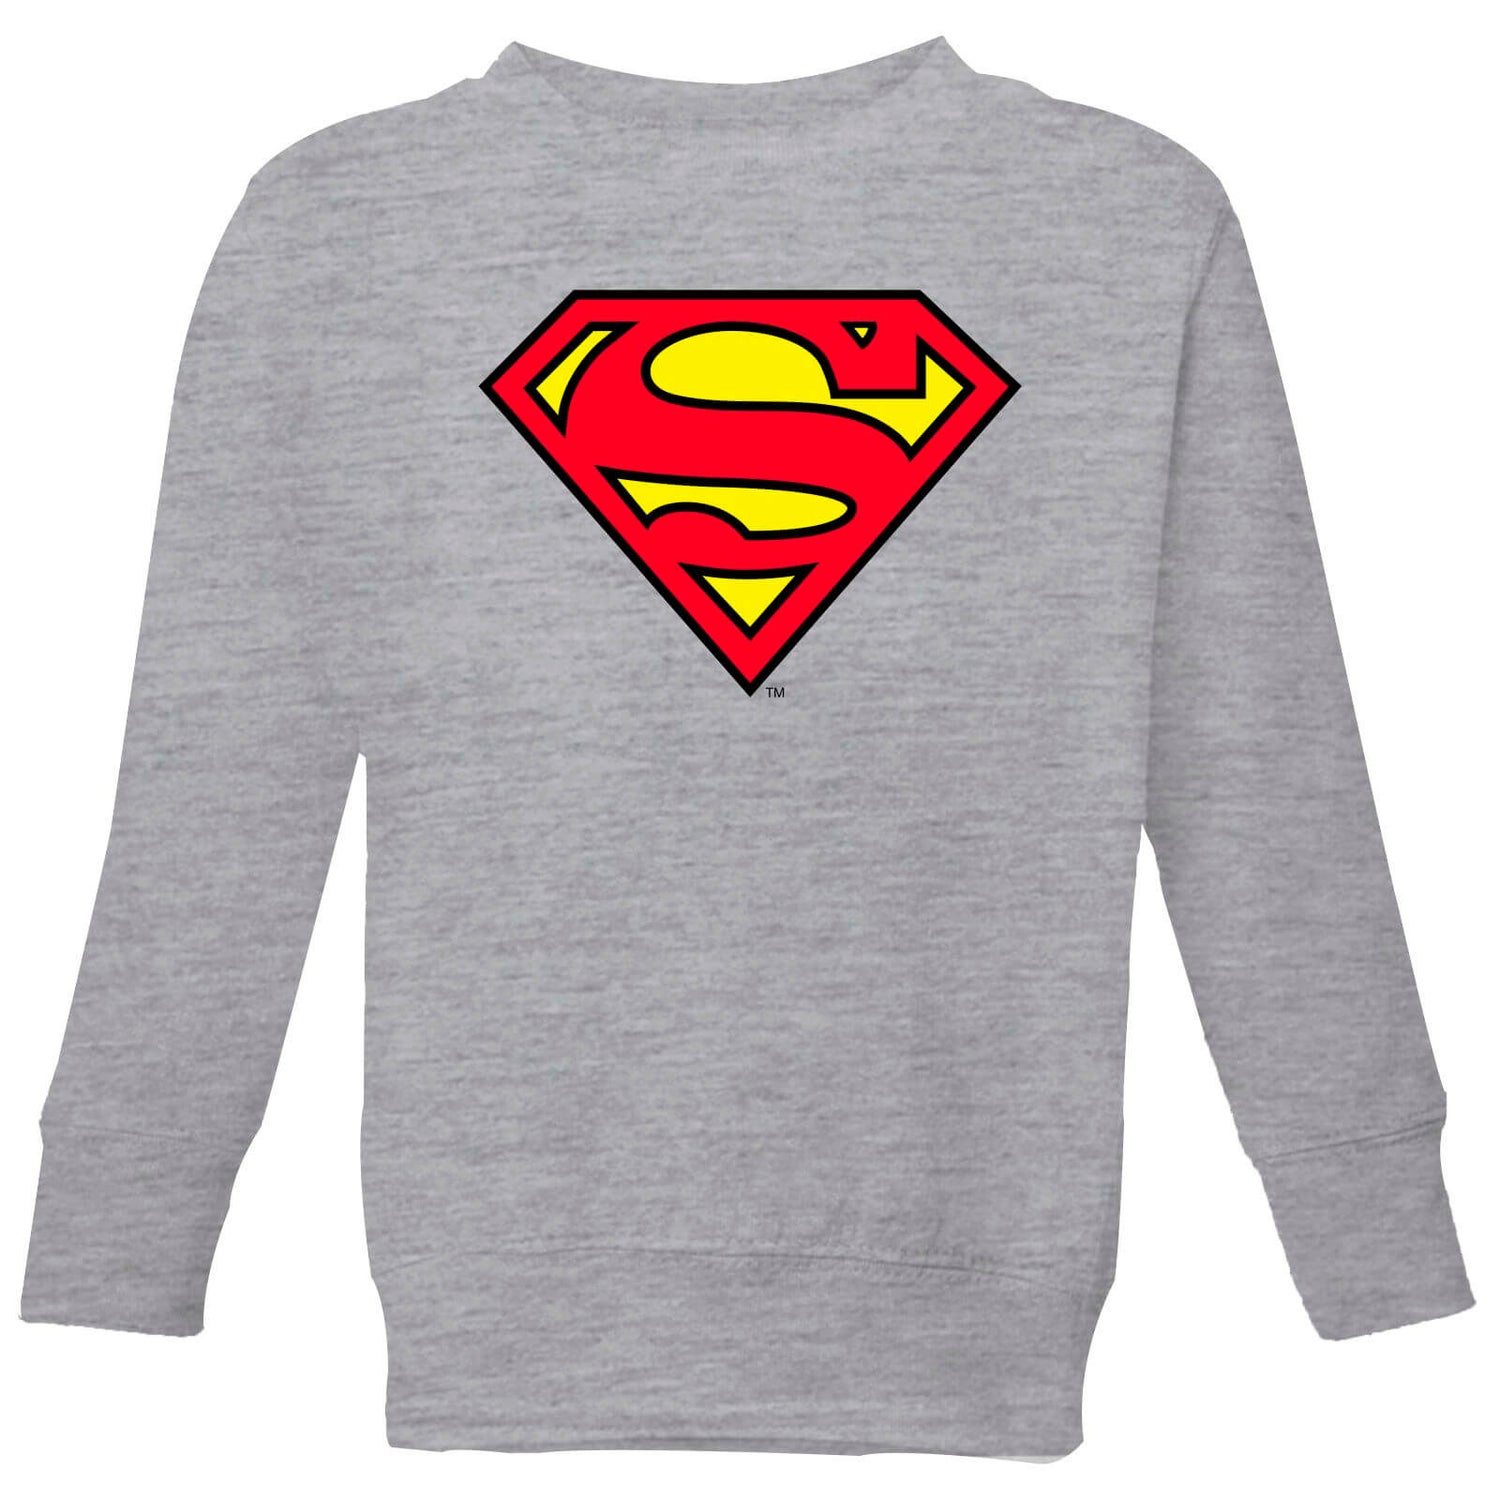 Official Superman Shield Kids' Sweatshirt - Grey